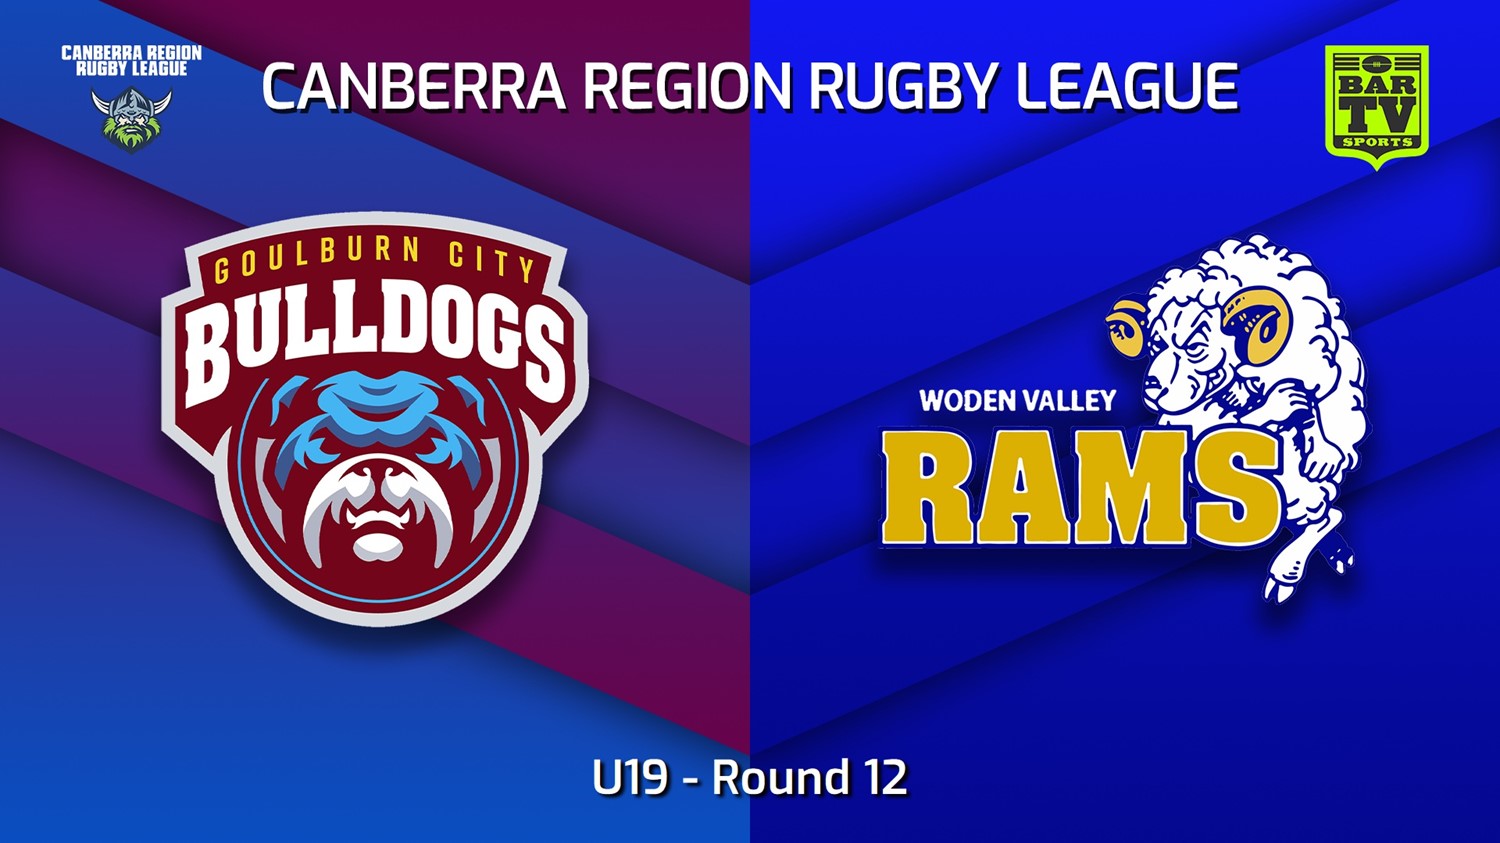 230708-Canberra Round 12 - U19 - Goulburn City Bulldogs v Woden Valley Rams Slate Image